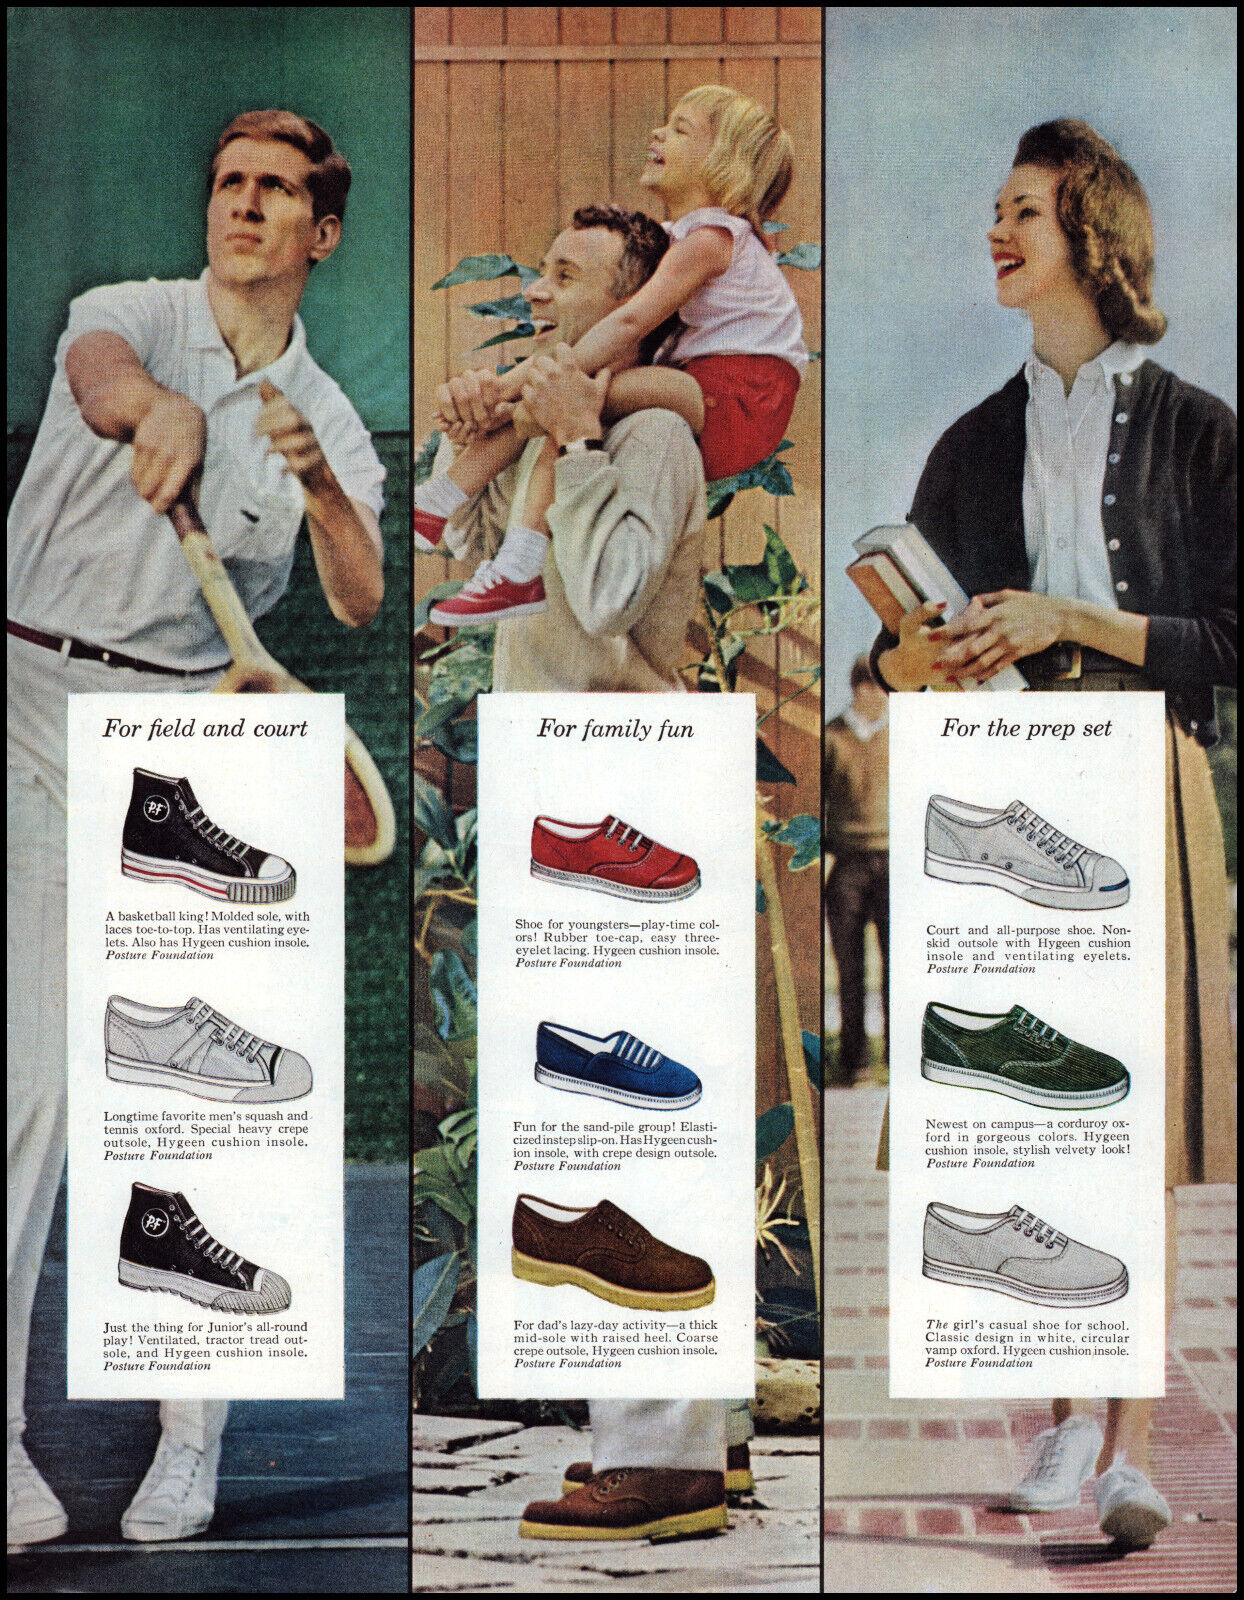 1960 PF Flyers Posture Foundation family rec shoes retro photo print ad LA35